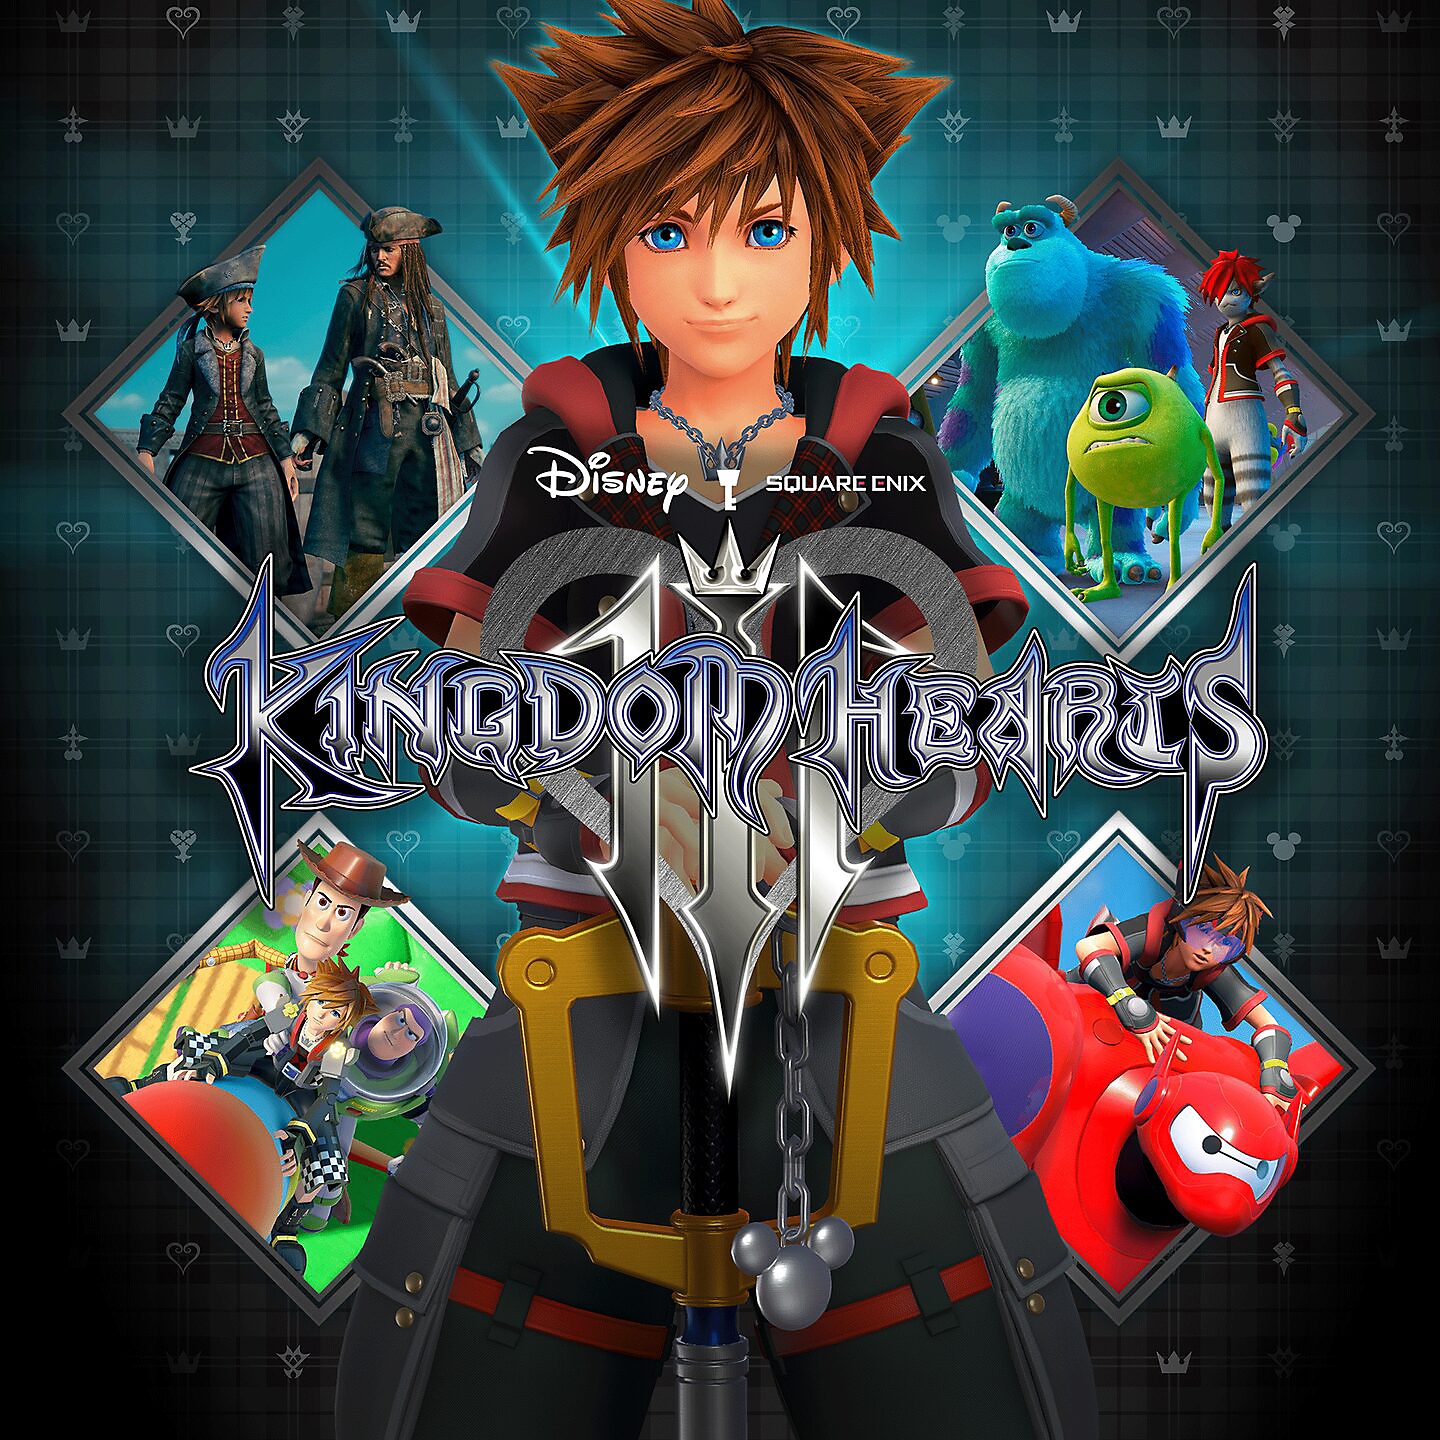 Kingdom Hearts III - Together Trailer [PS4, deutsch]